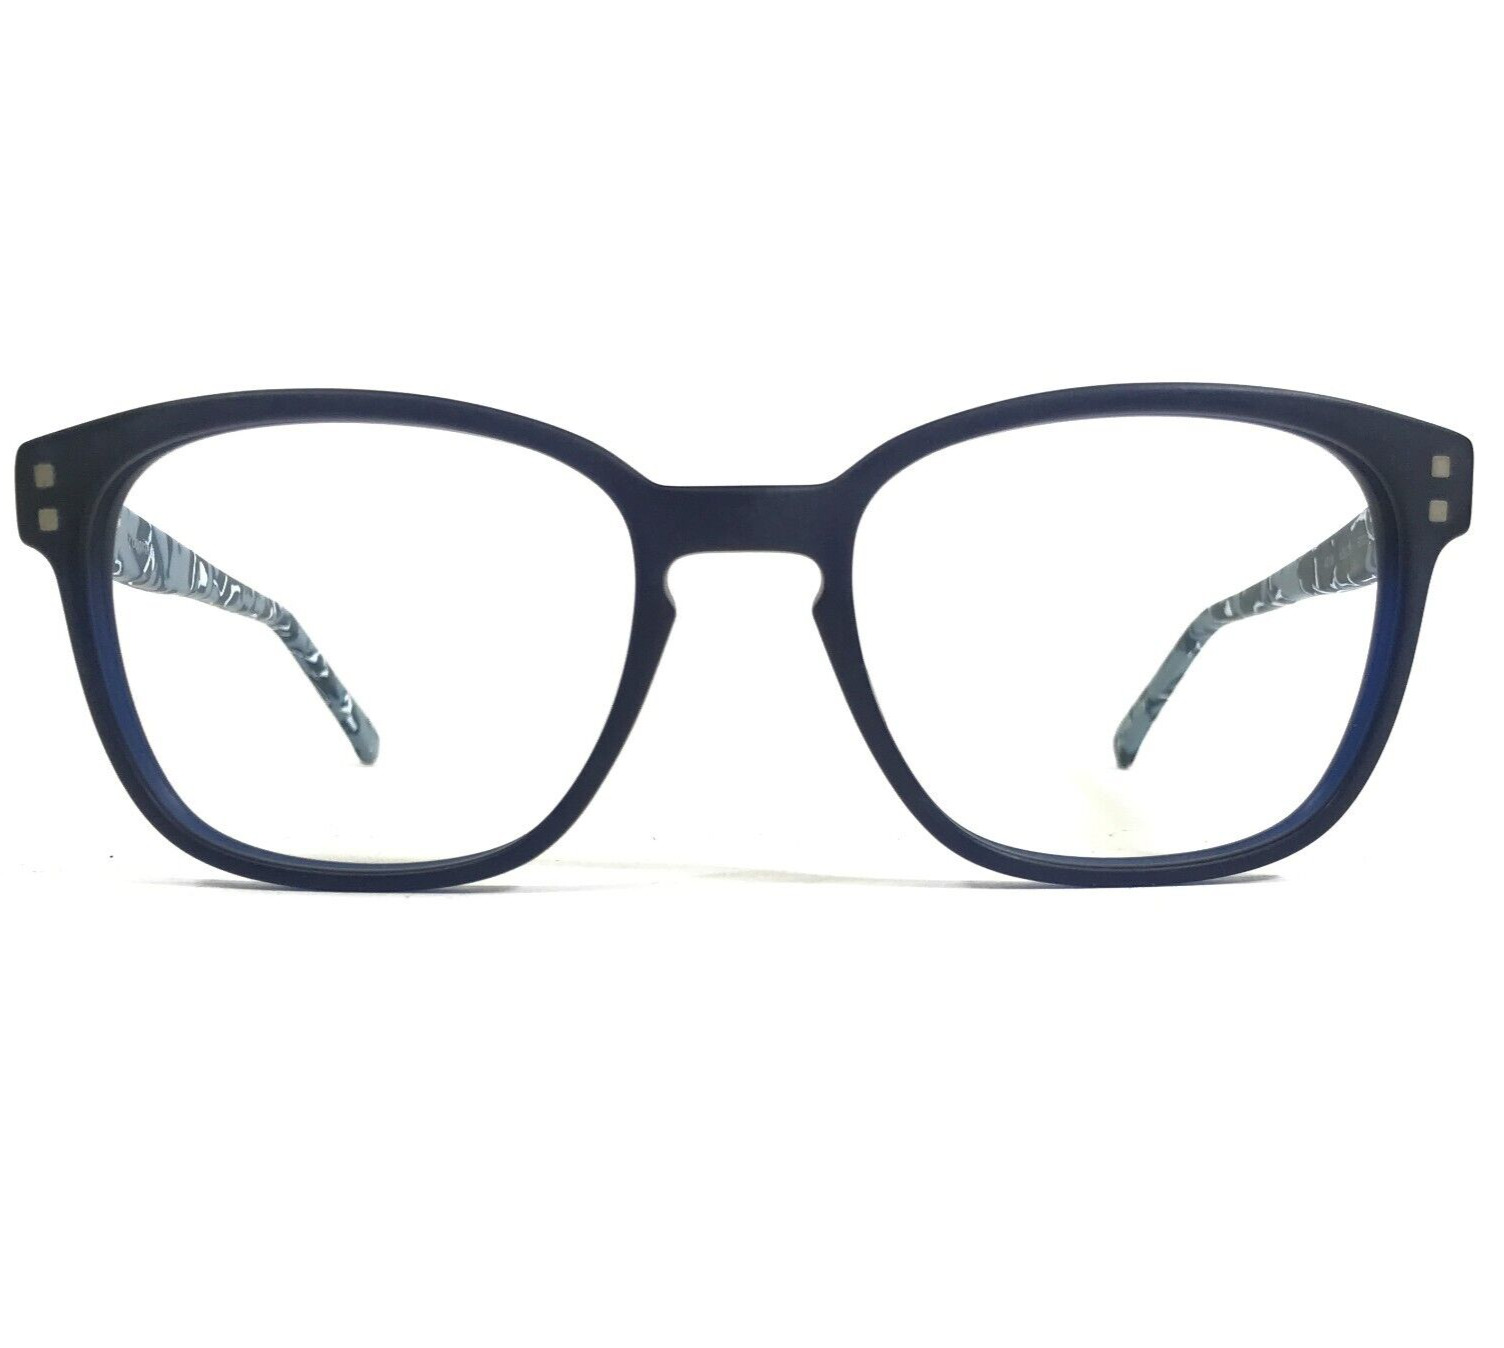 Prodesign Eyeglasses Frames 4718 c.9121 Matte Navy Blue Square Marble 53-19-140